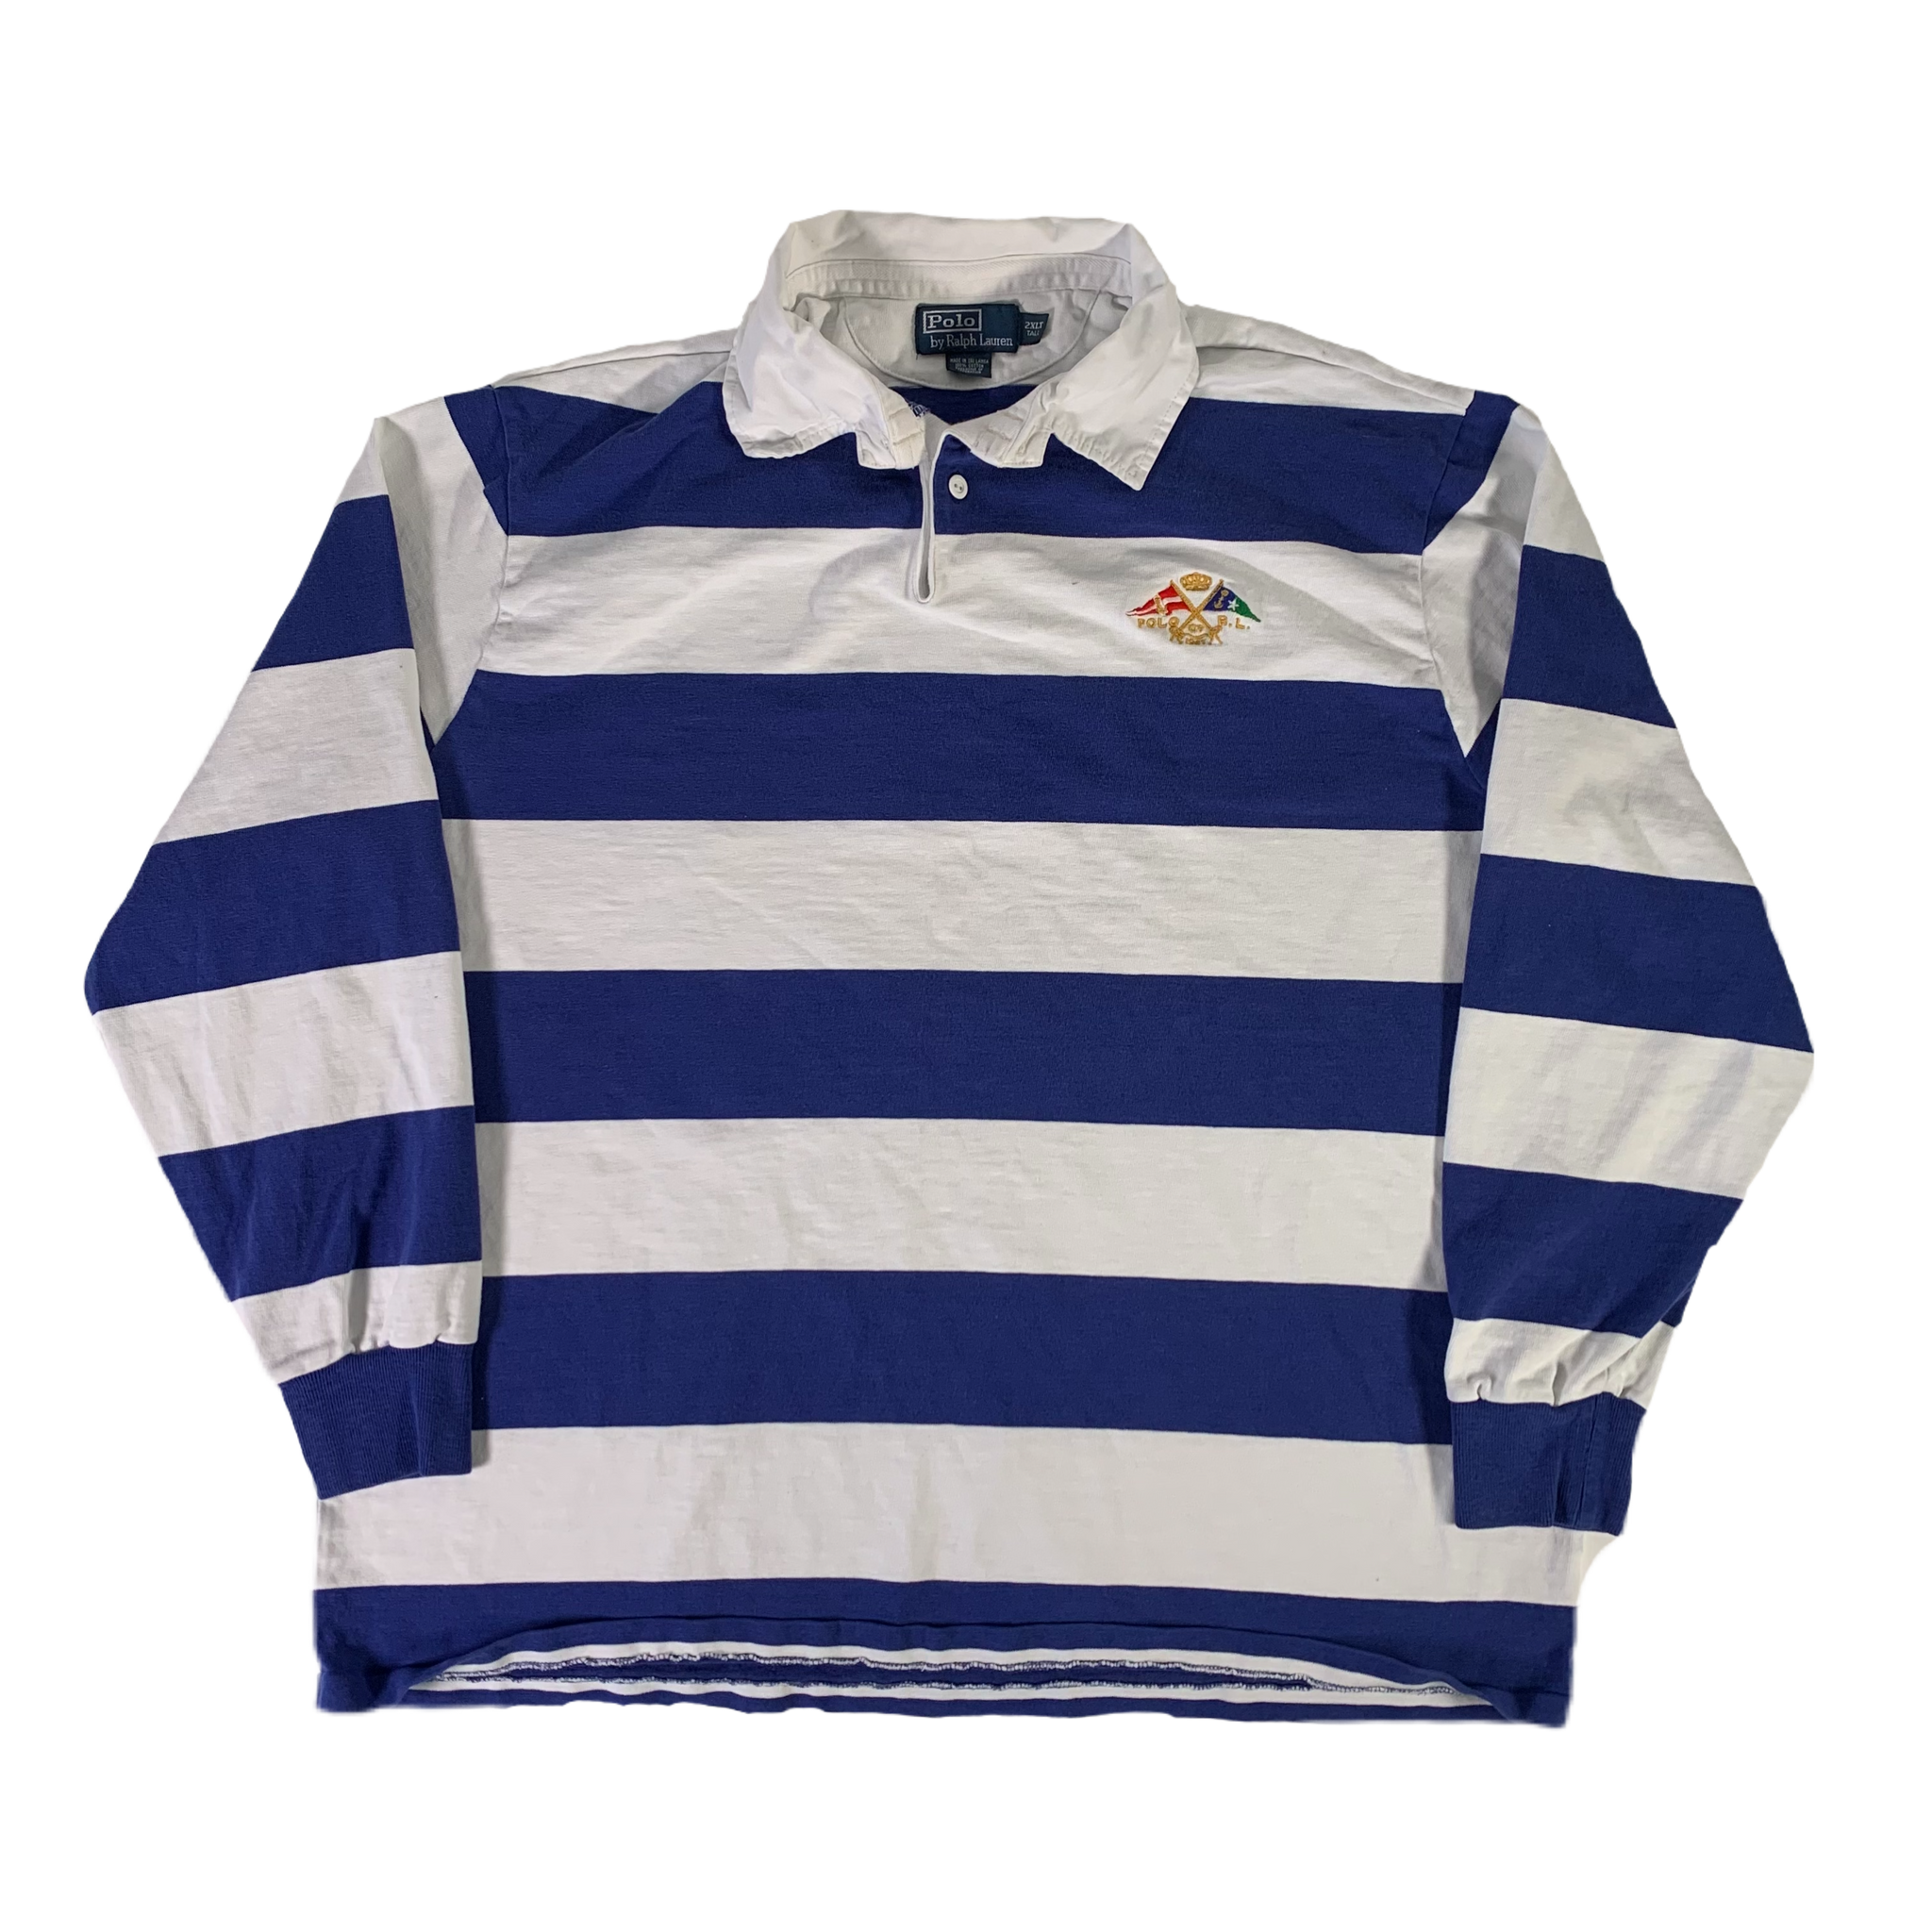 Rugby Ralph Lauren, Shirts